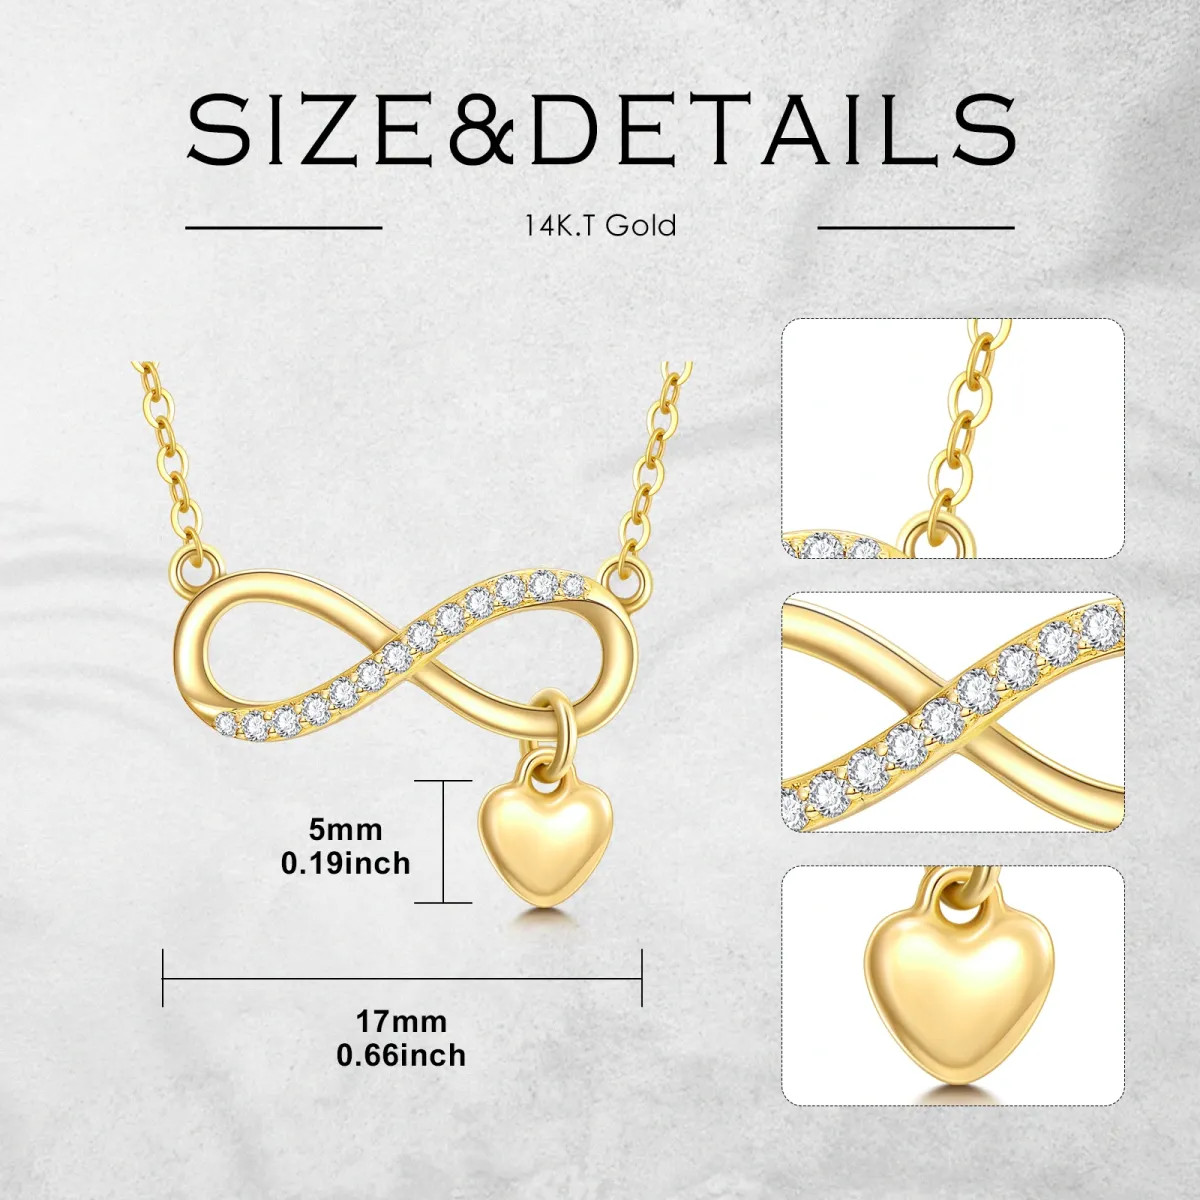 Collier en or 14K avec pendentif circulaire en zircon cubique en forme de coeur et symbole-5